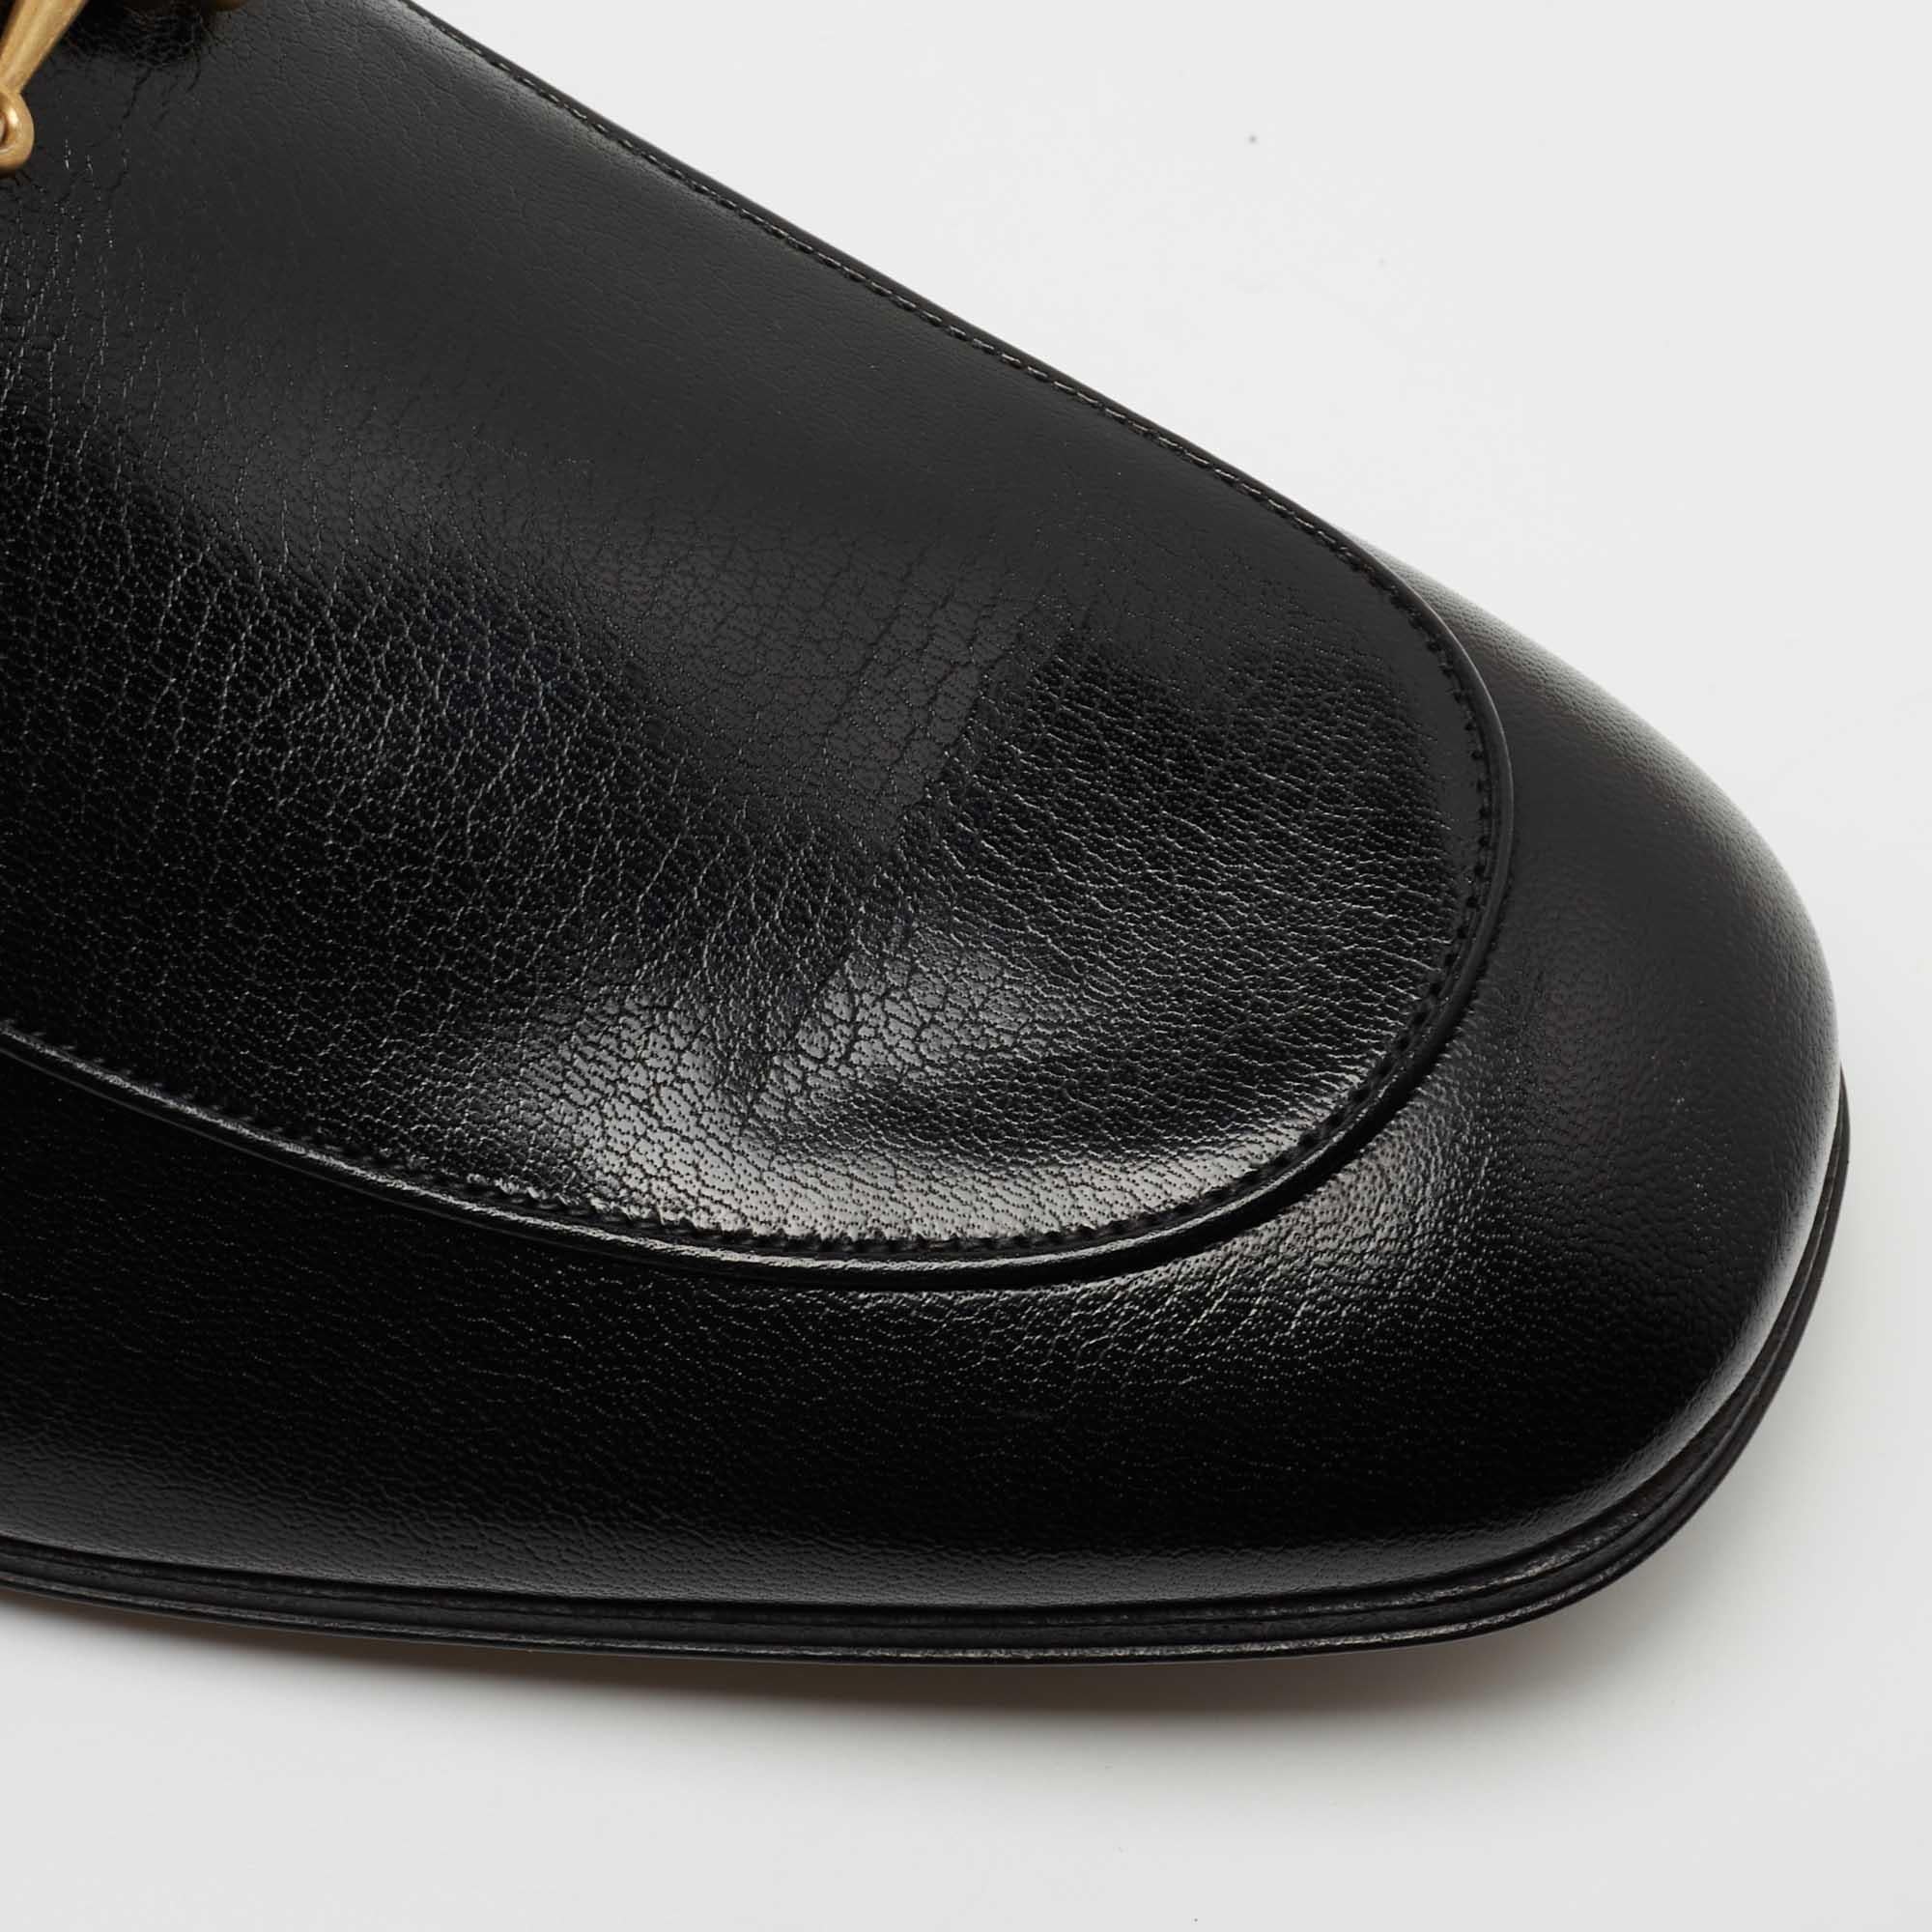 Gucci Black Leather Jordaan Horsebit Slip On Loafers Size 43 1